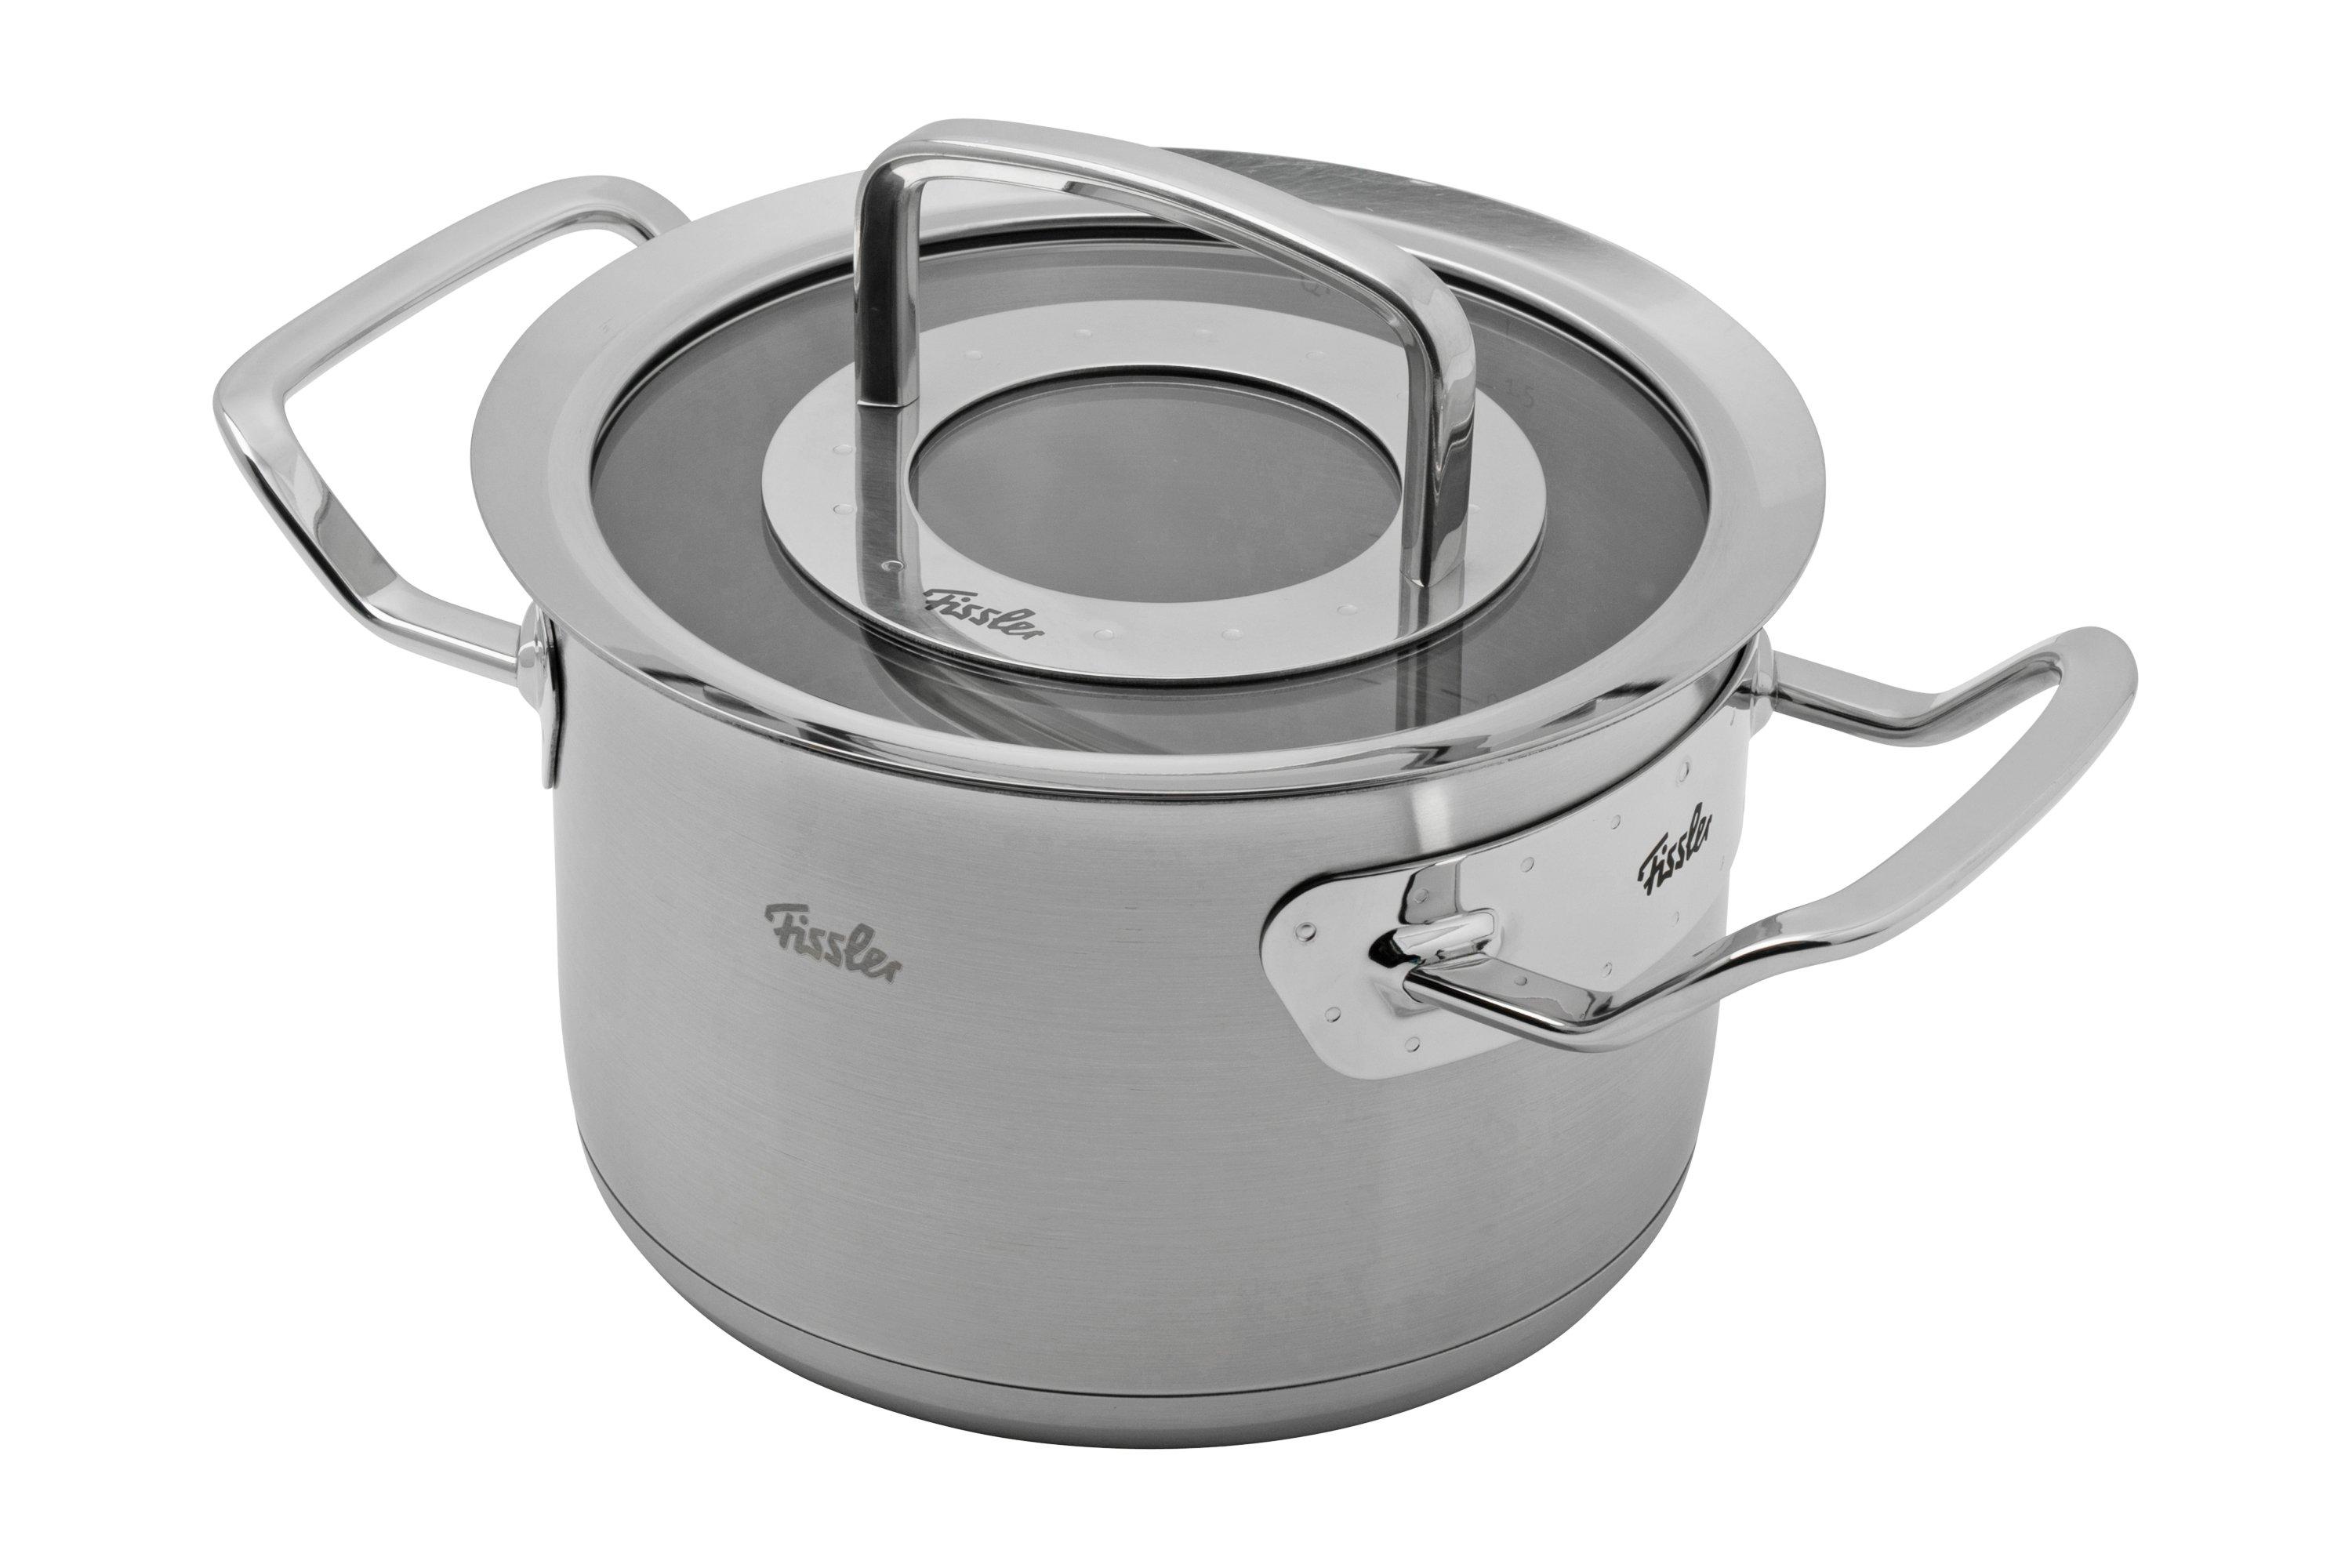 Fissler Original Profi Collection cooking pot, cm 084-129-16-000-0 shopping | 16 Advantageously at